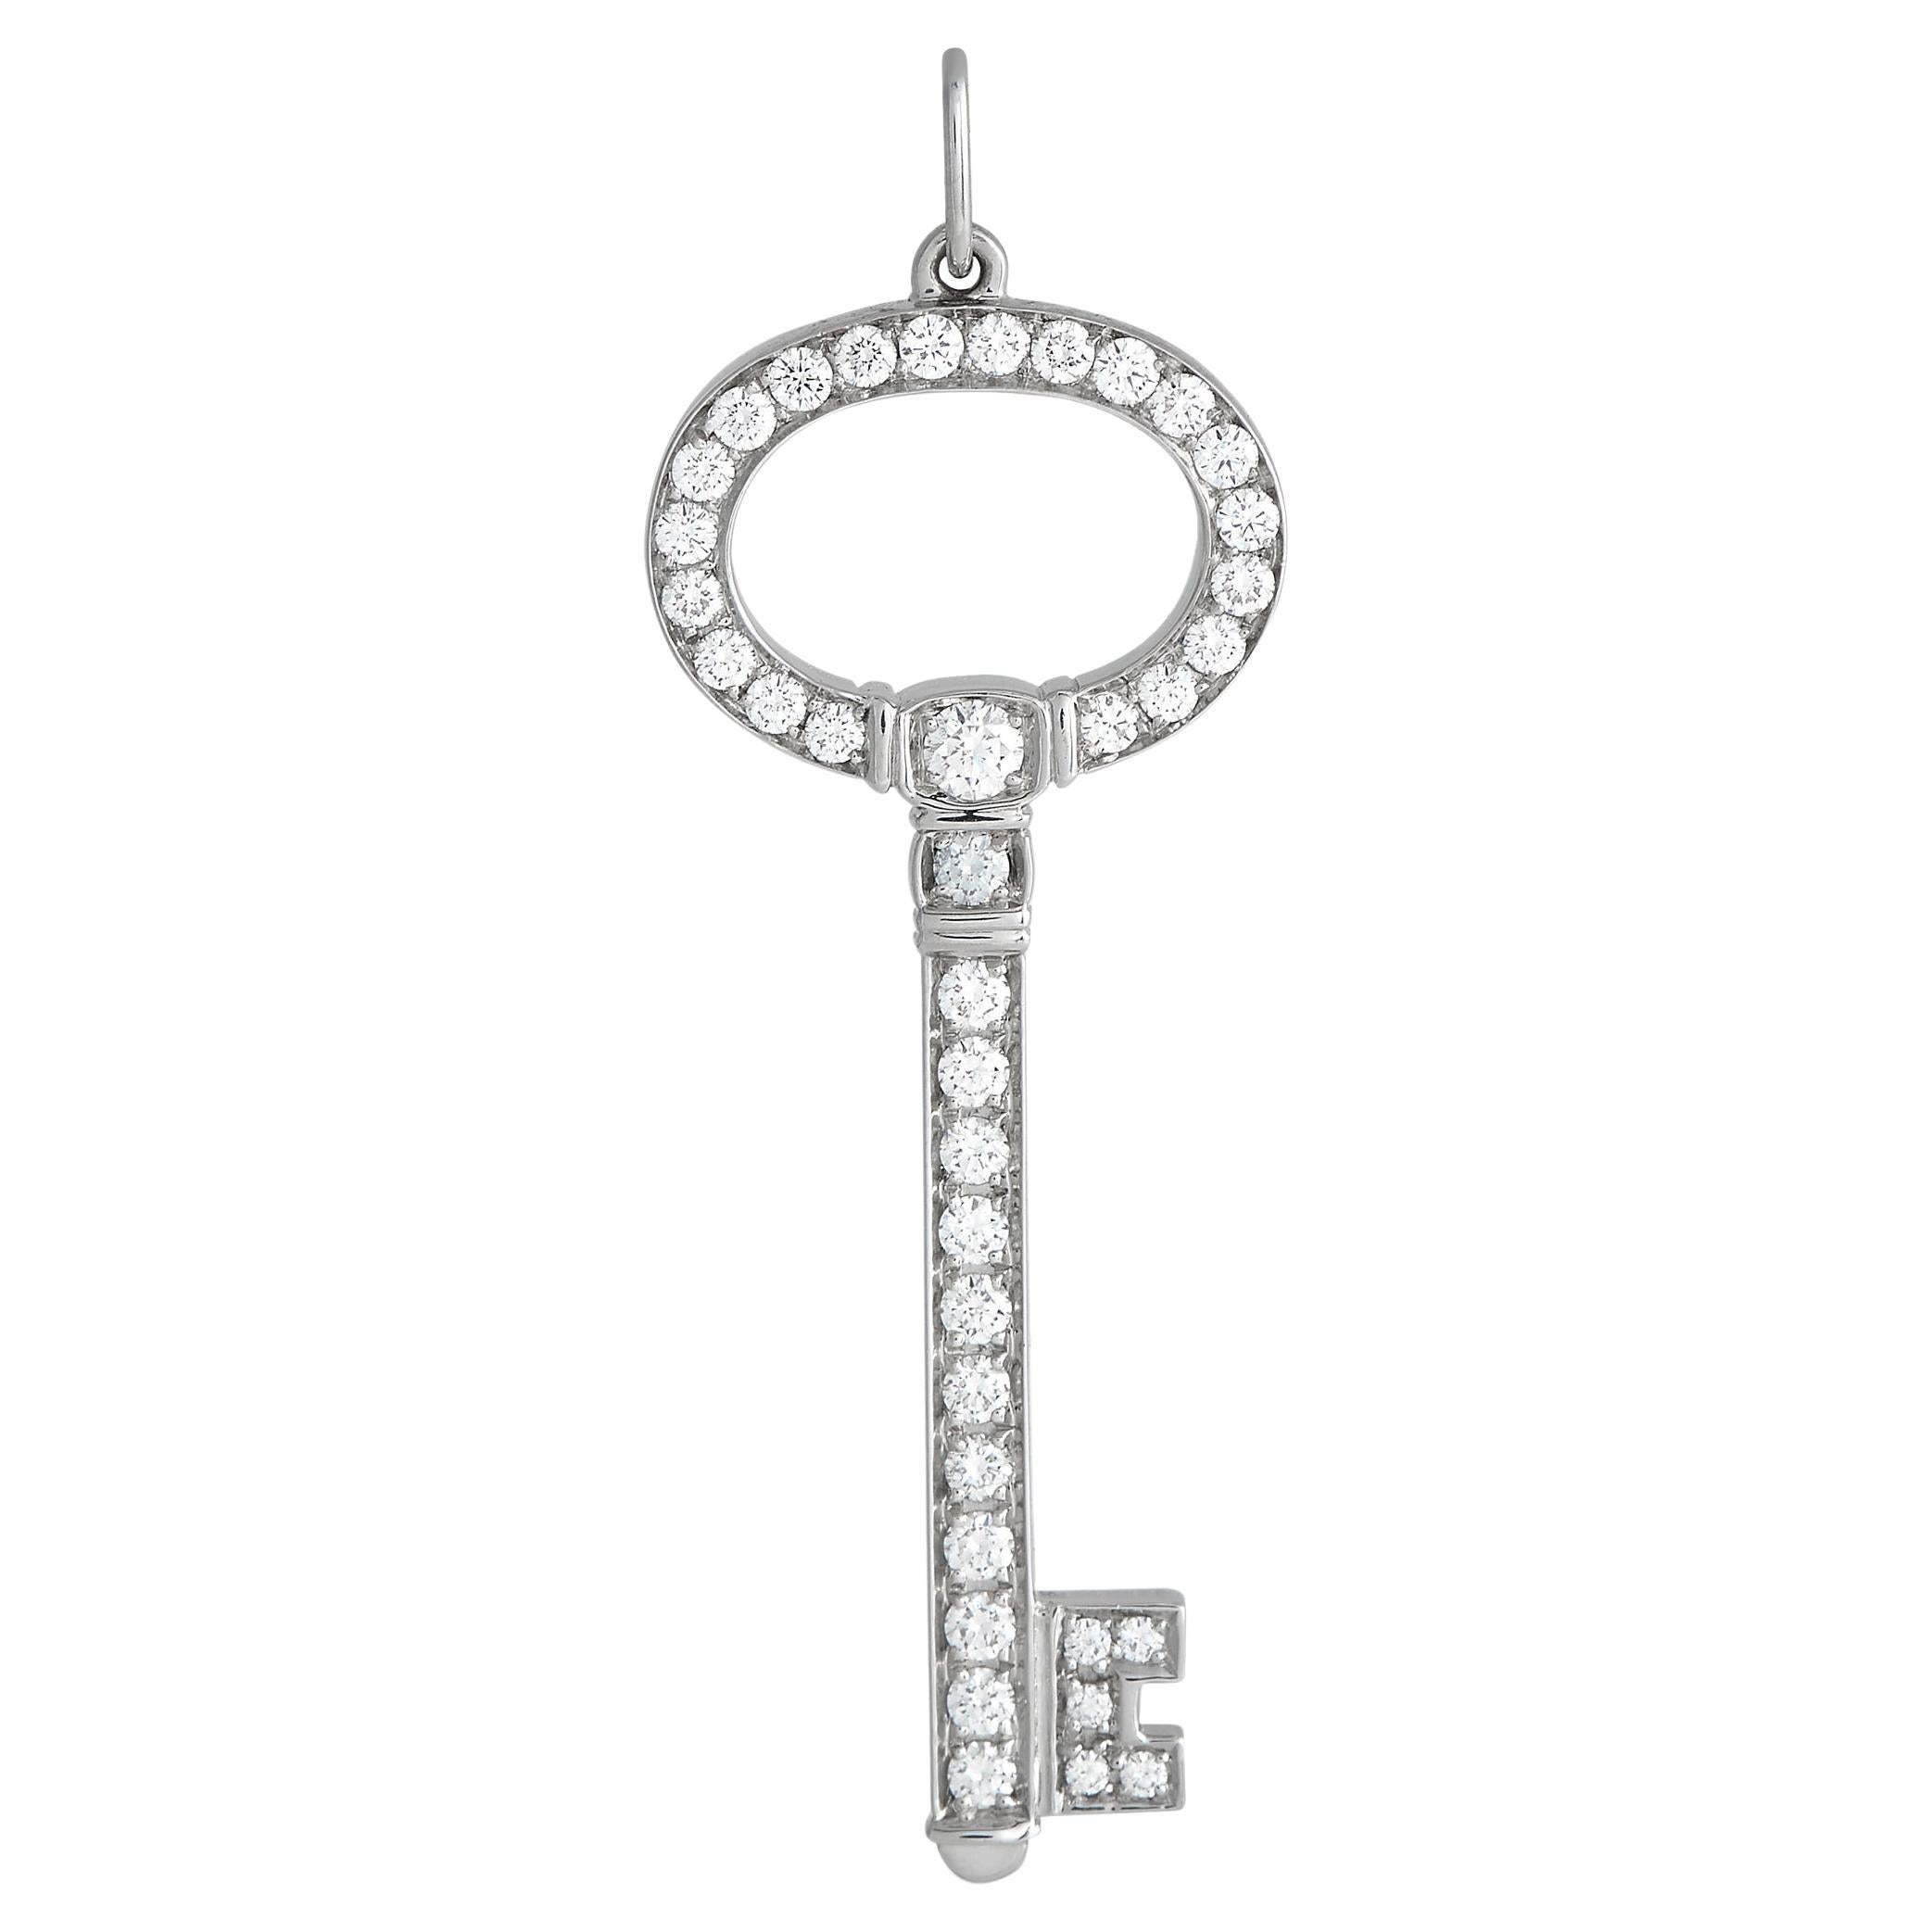 Tiffany & Co. Pendentif clé en platine avec diamants 0,58 carat